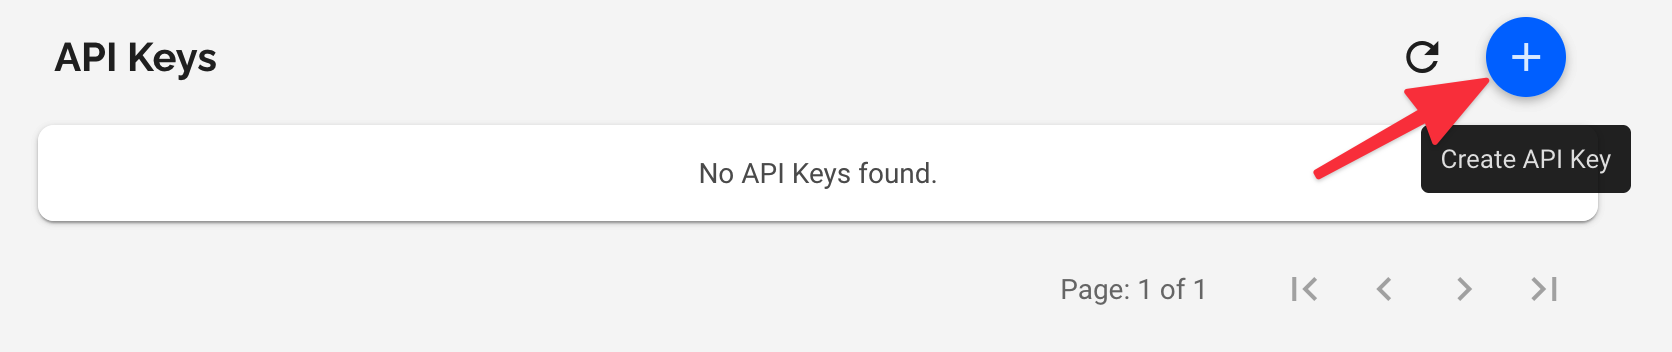 The menu of API Keys with an arrow pointing to the create api key button